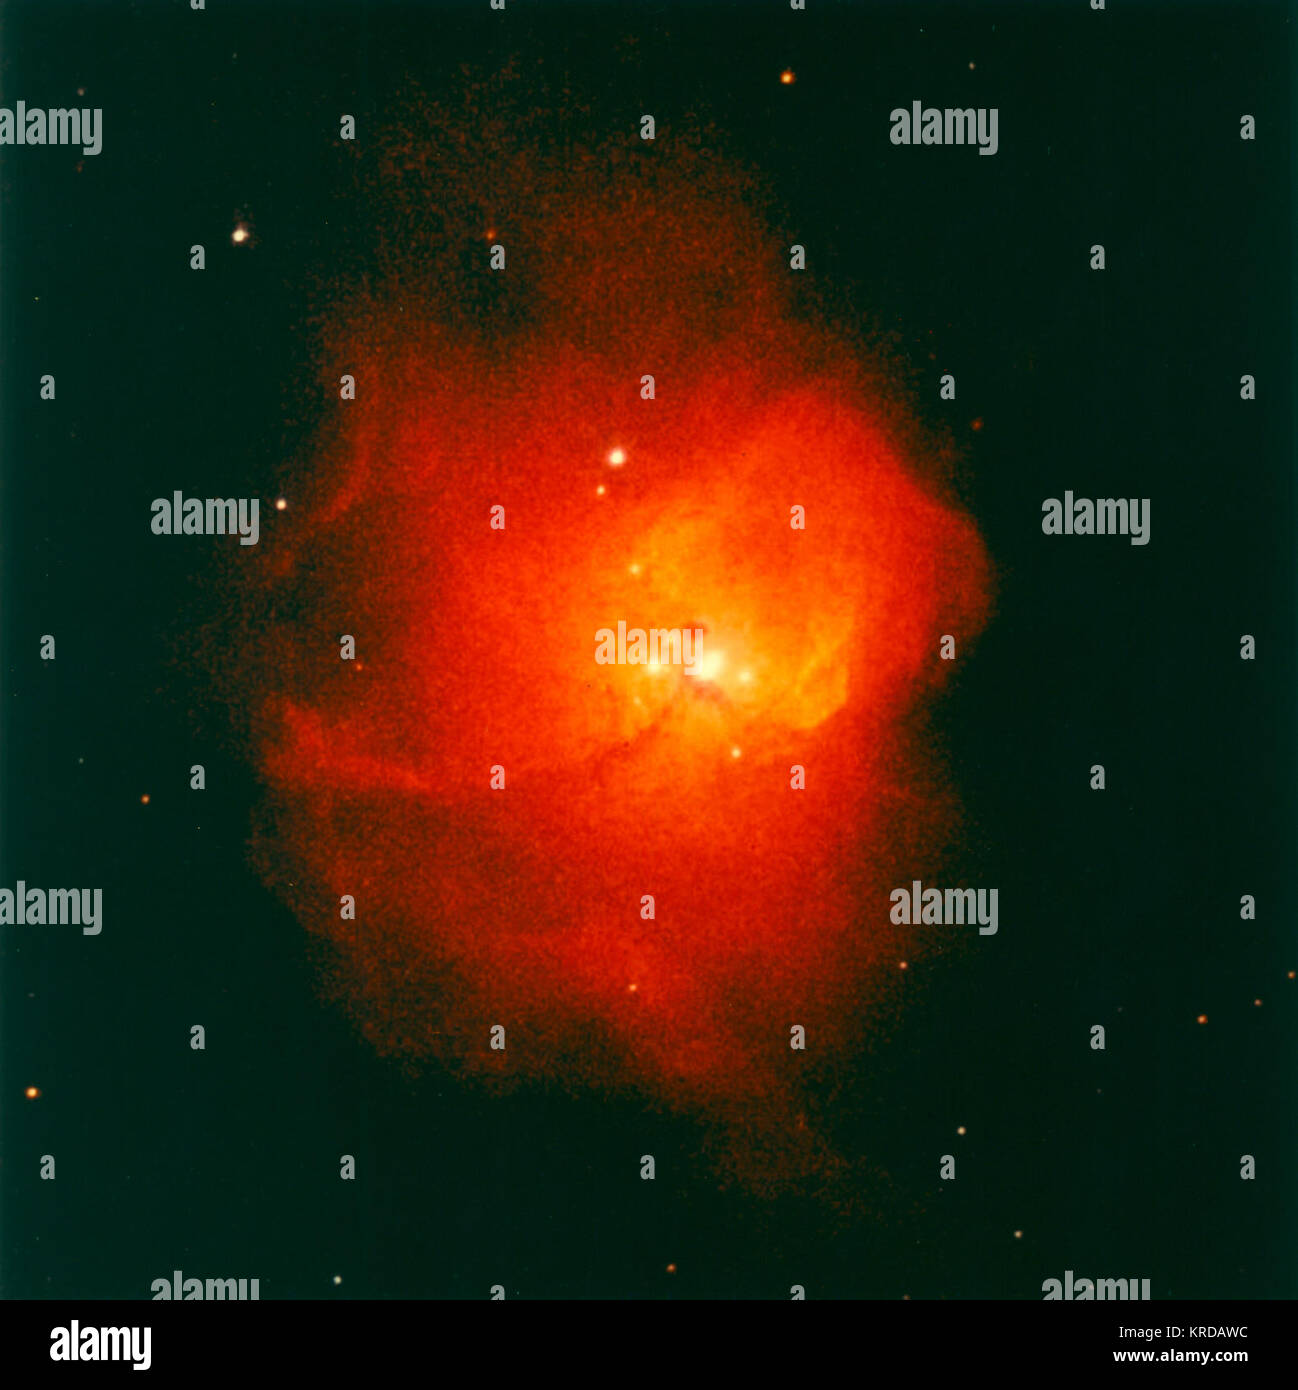 N81 in the Small Magellanic Cloud - GPN-2000-000951 Stock Photo